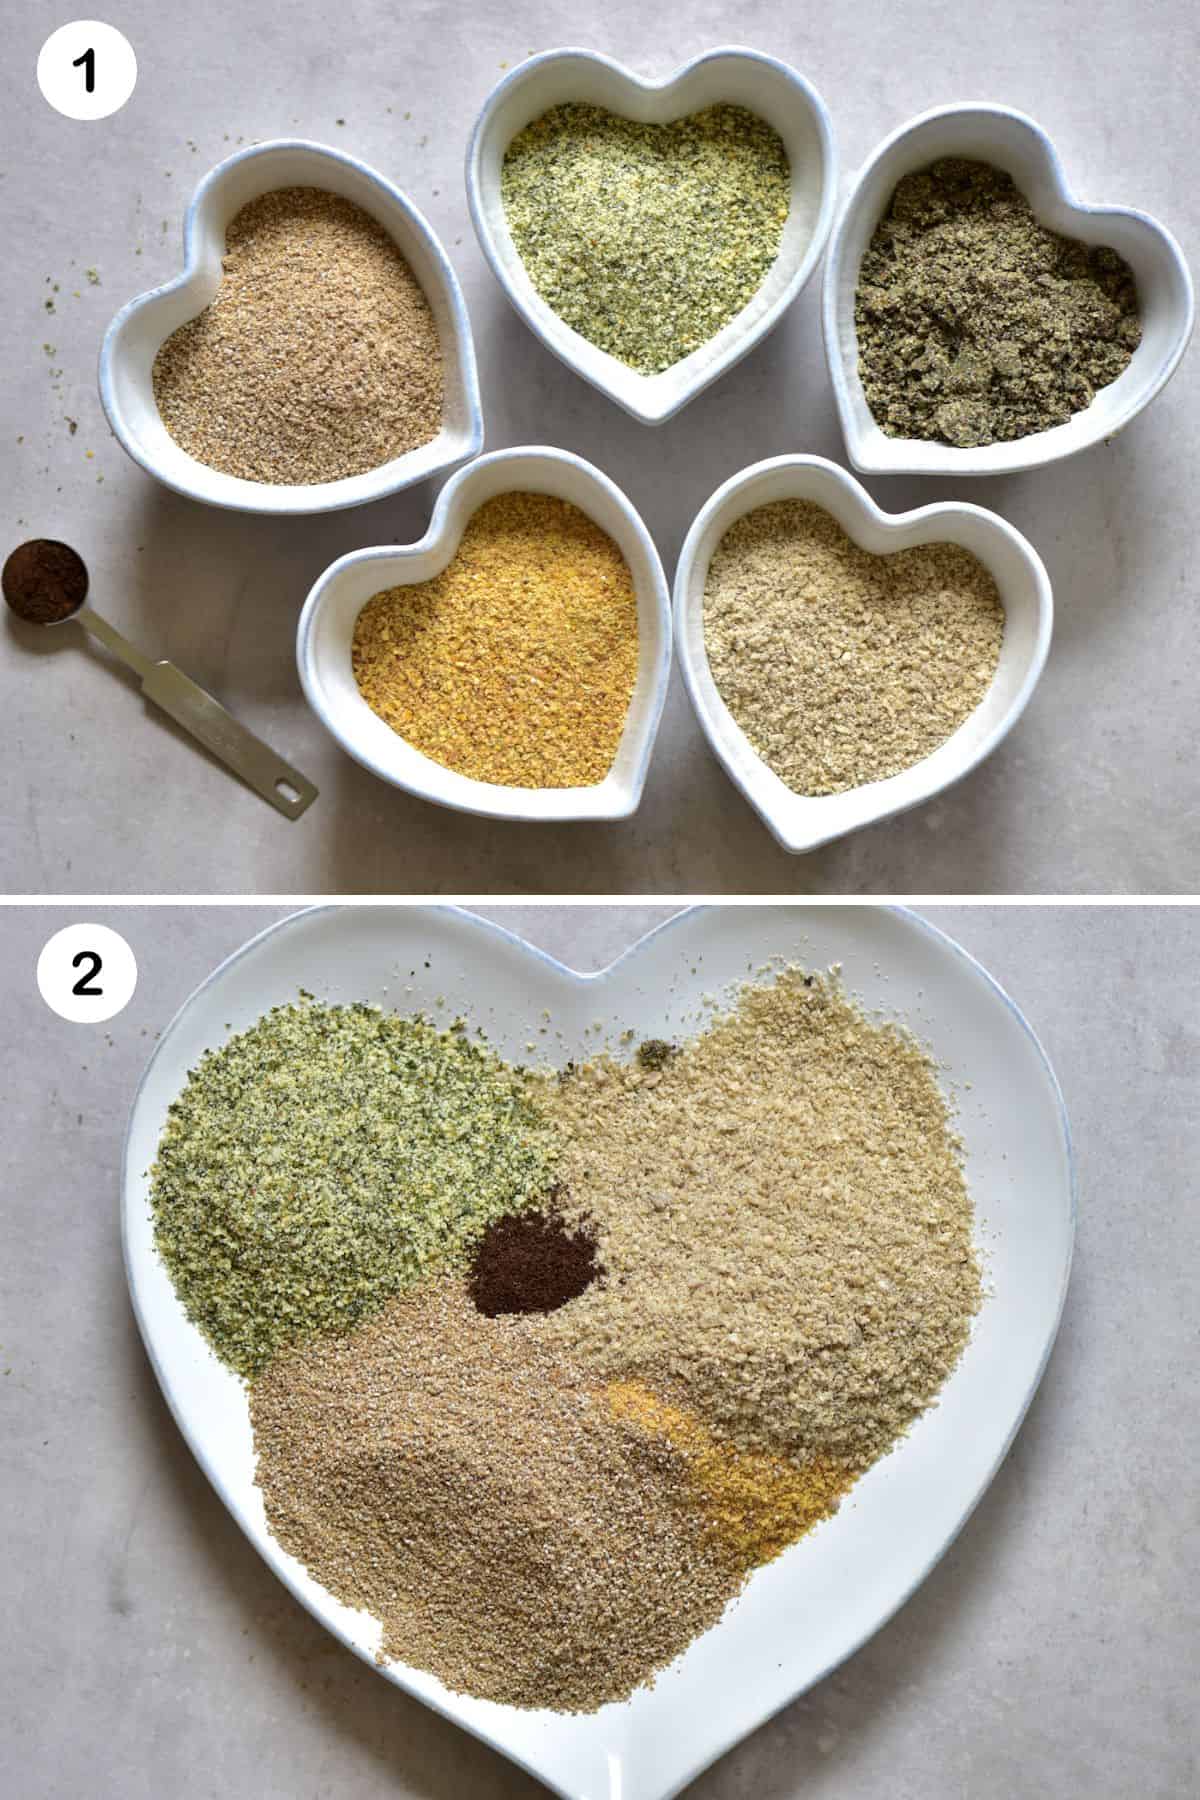 Steps for preparing homemade protein powder